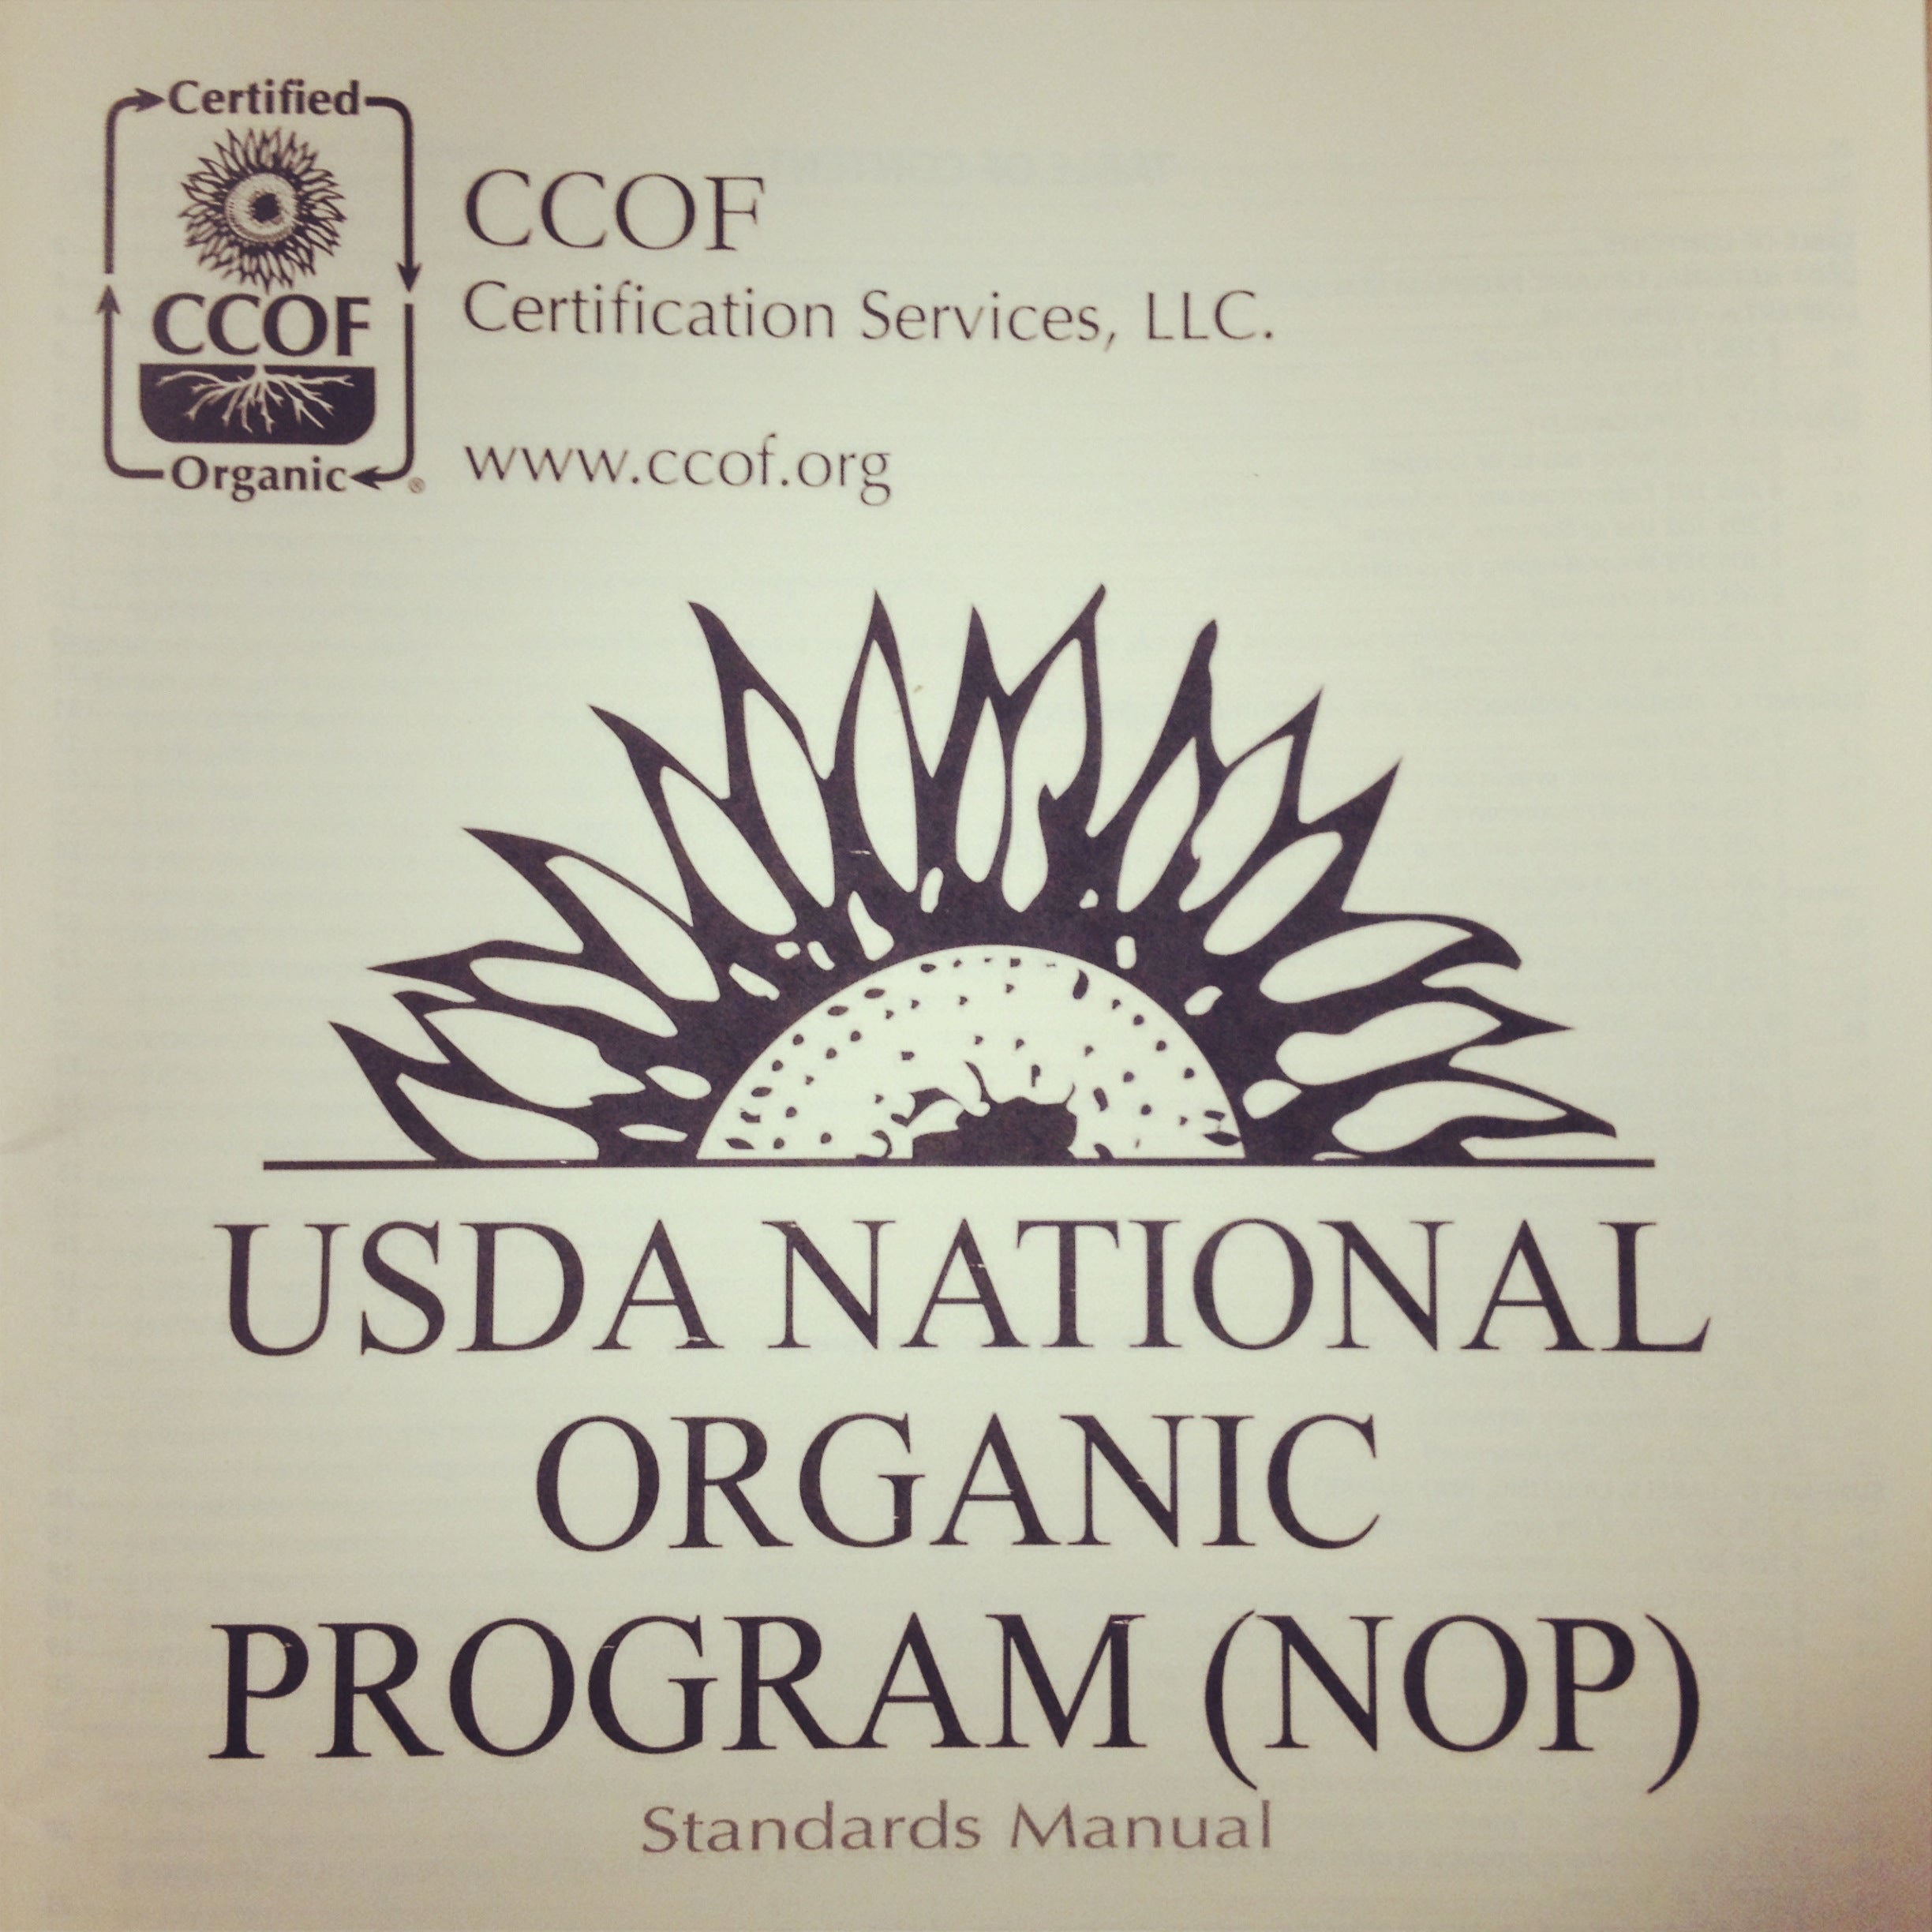 USDA National Organic Program (NOP) Standards